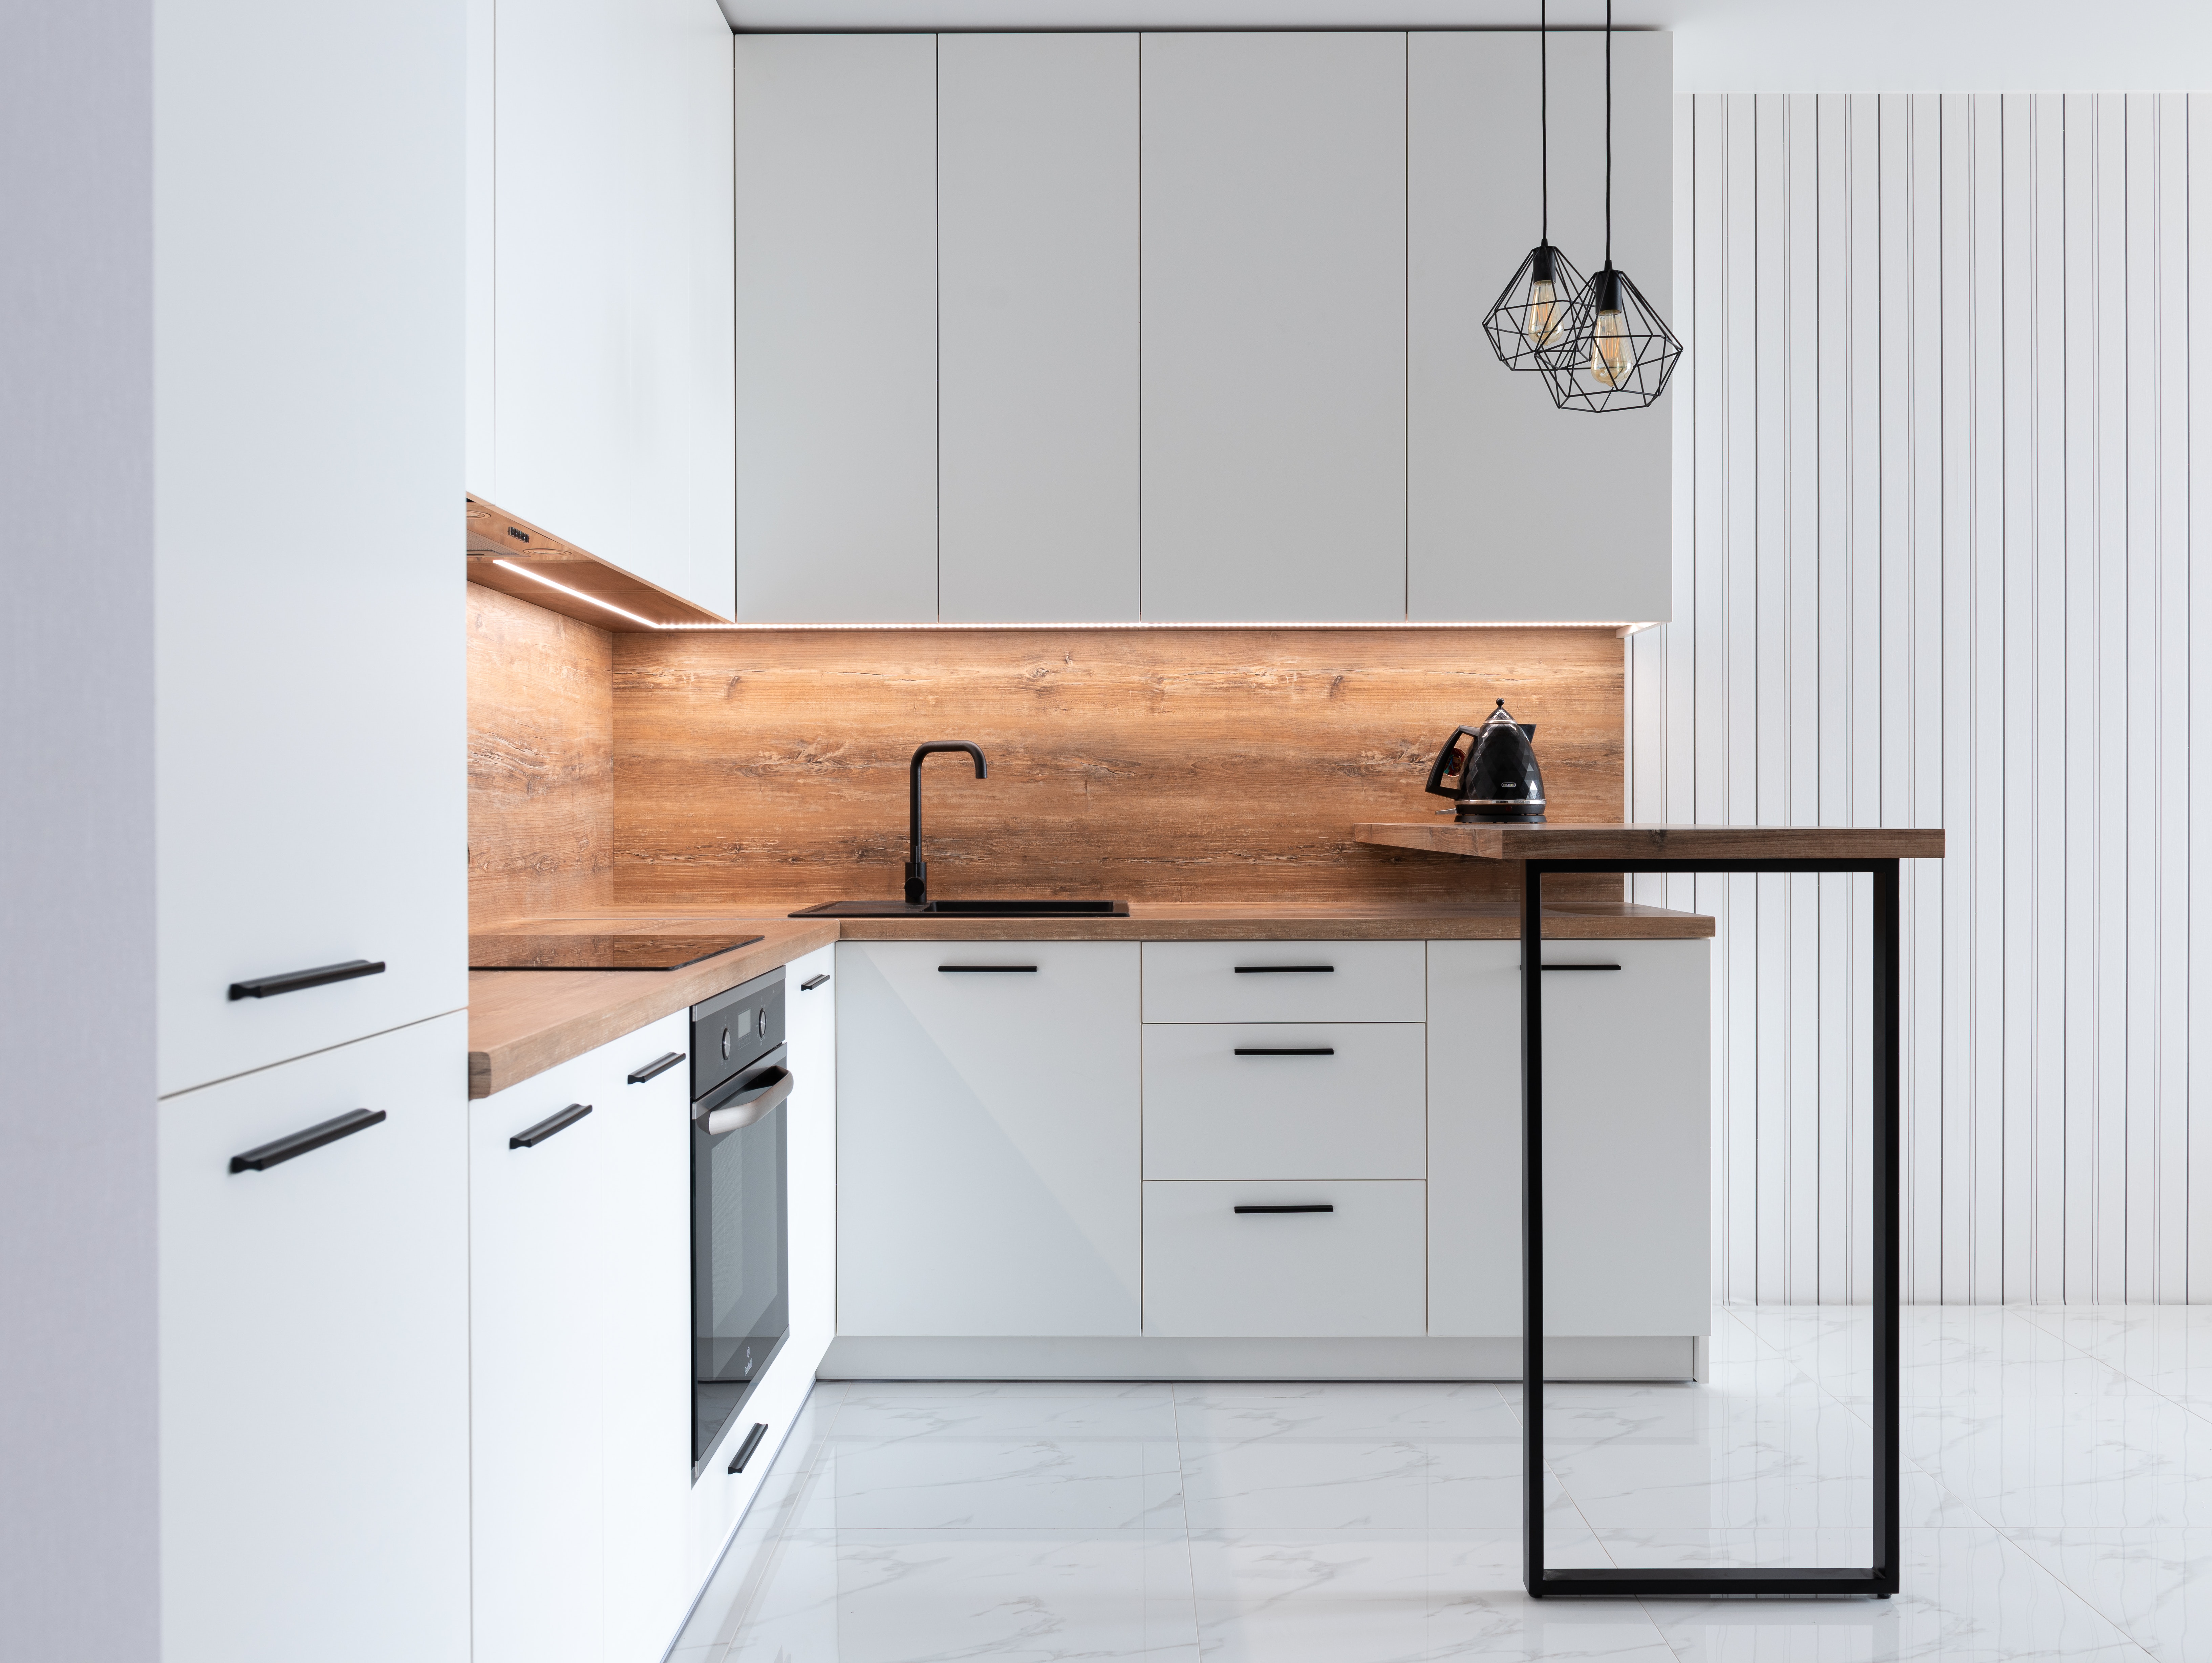 Stock Photo featuring white-washed kitchen design and warm-toned wooden backsplash